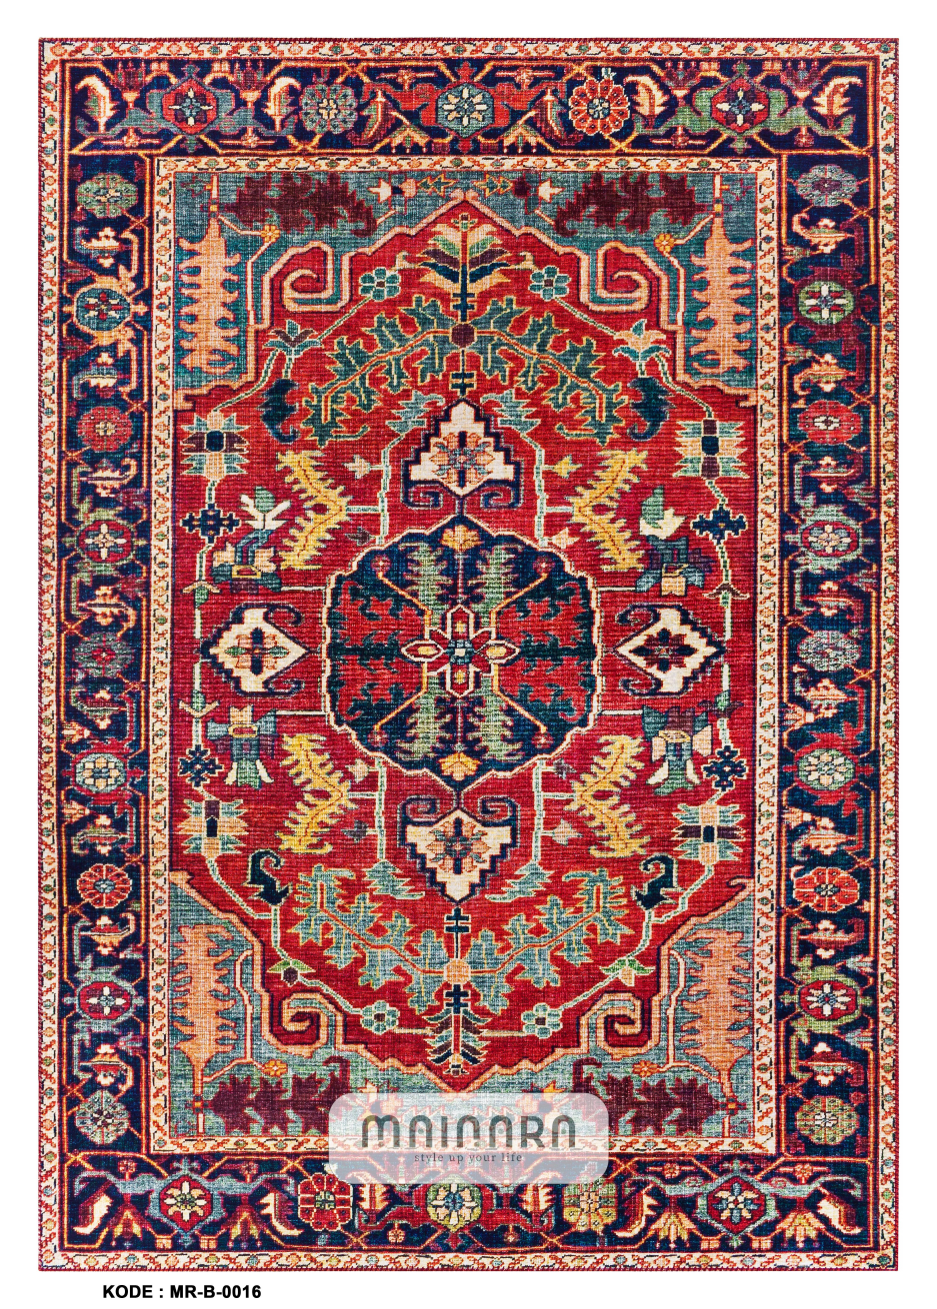 Karpet Bohemian (MR-B-0016) - Red,Maroon